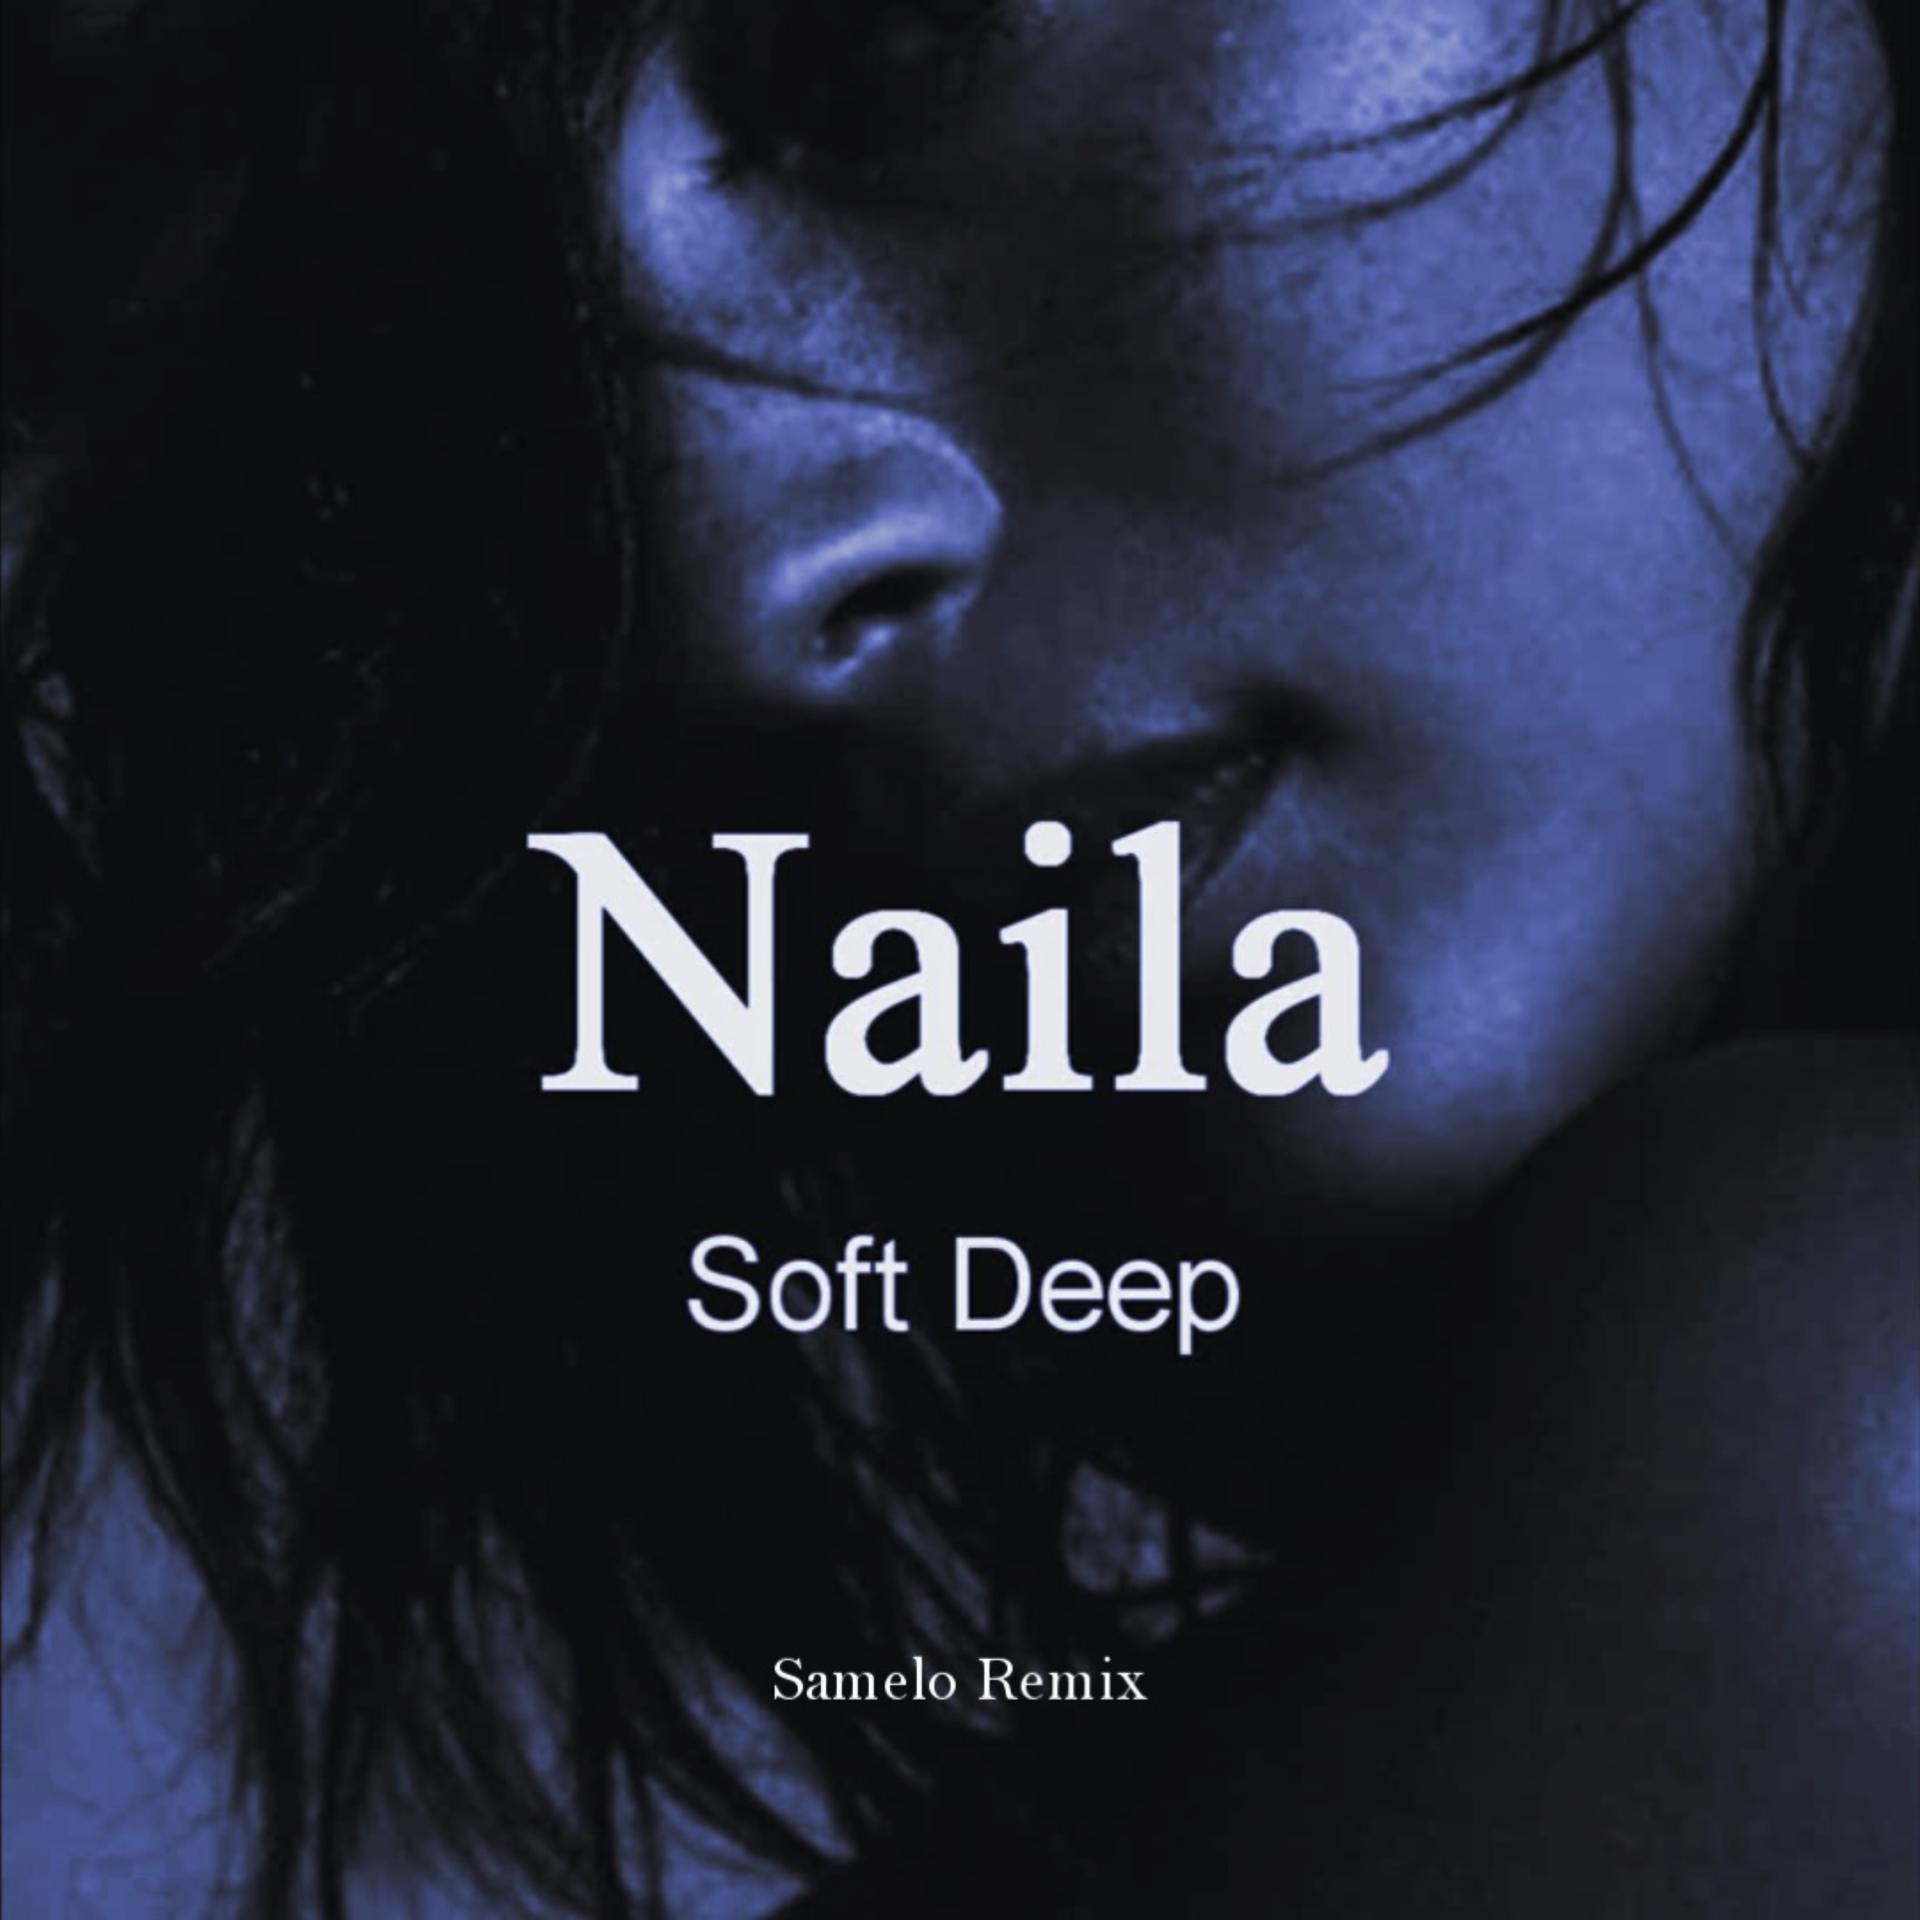 Soft Deep Naila. Soft Deep Maleena. Babylonia - Soft Deep - Naila (Samelo Remix). Samelo - Dreaming. Voices samelo